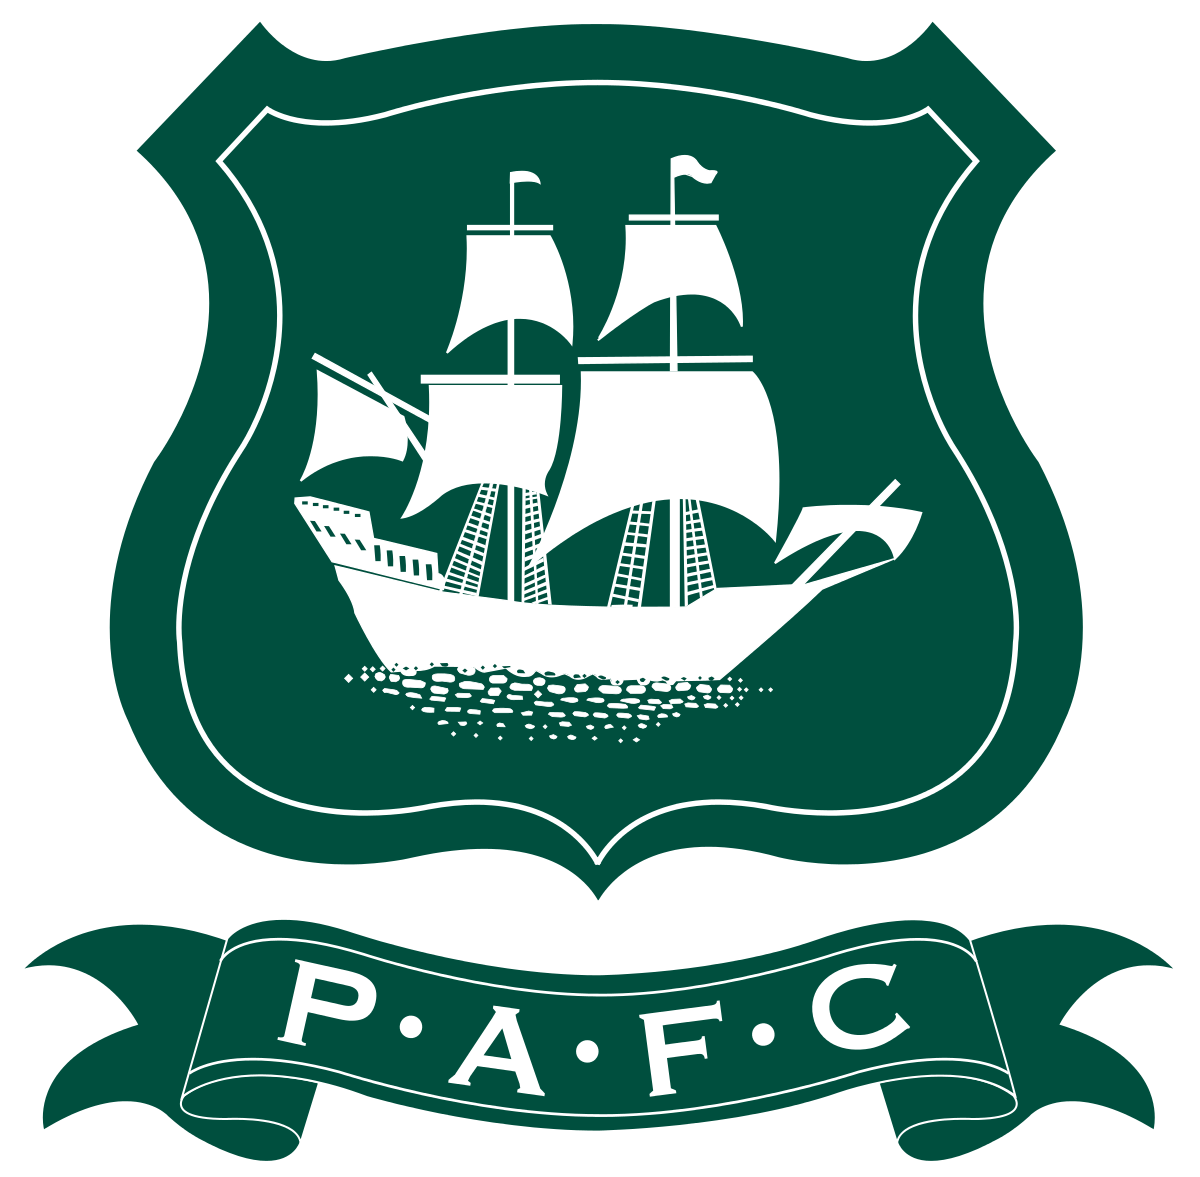 Old Plymouth Logo - Plymouth Argyle F.C.